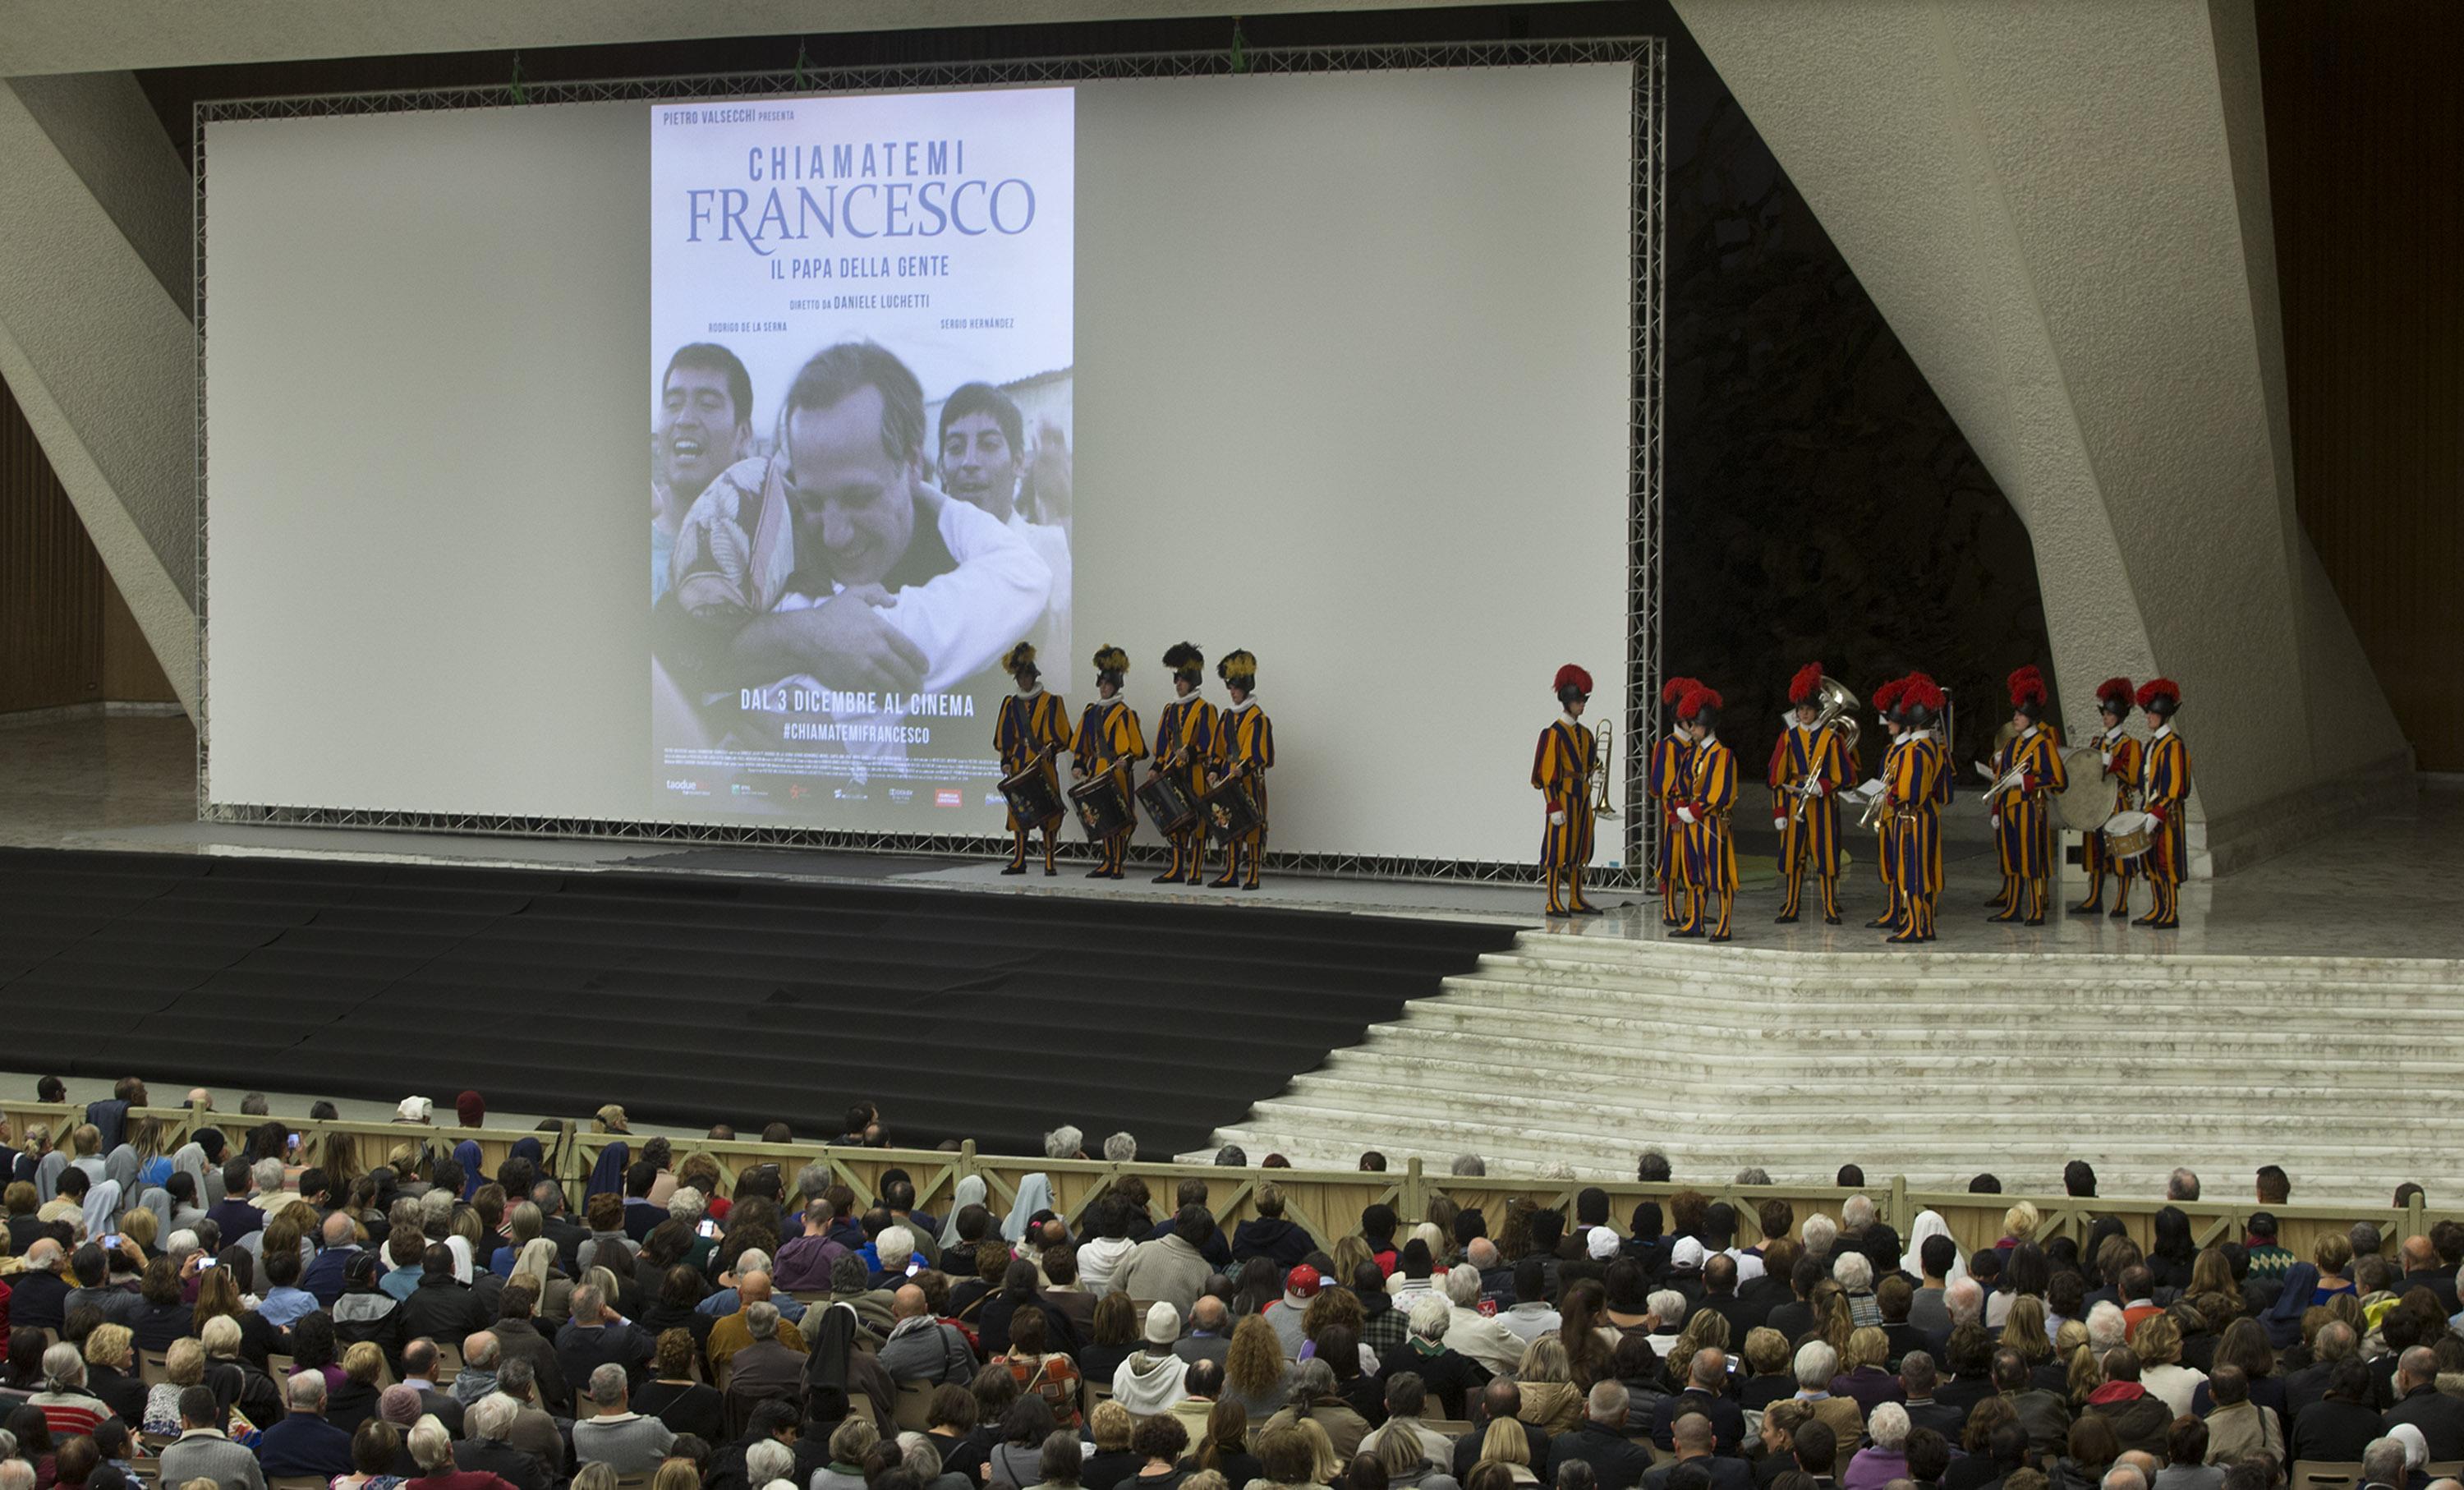 Swiss Guard's Band performs prior presentation of "Chiamatemi Francesco" movie in Nervi Hall